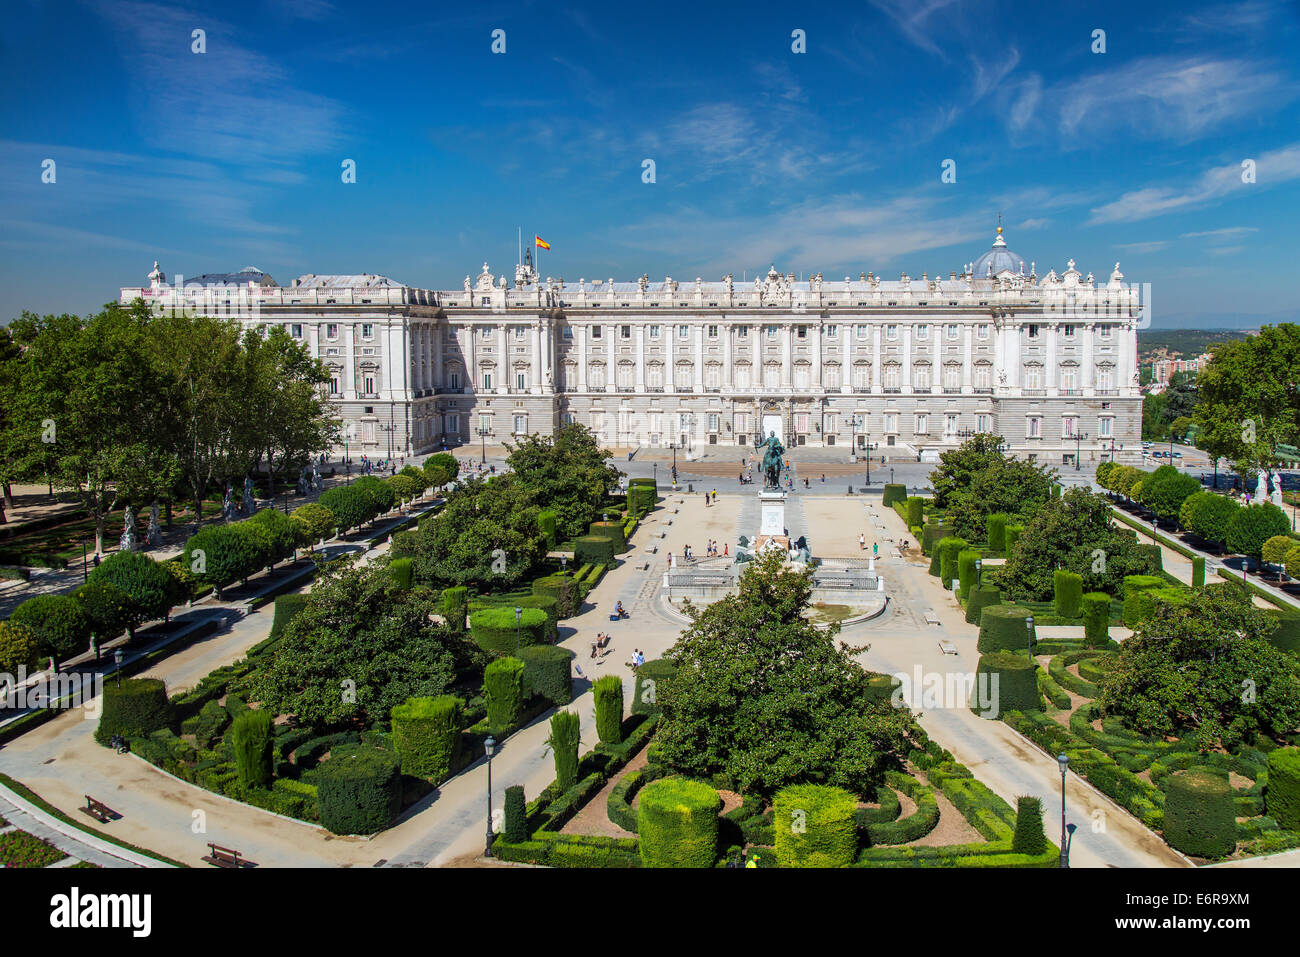 Top view over Plaza de Oriente square with Palacio Real or Royal Palace behind, Madrid, Comunidad de Madrid, Spain Stock Photo